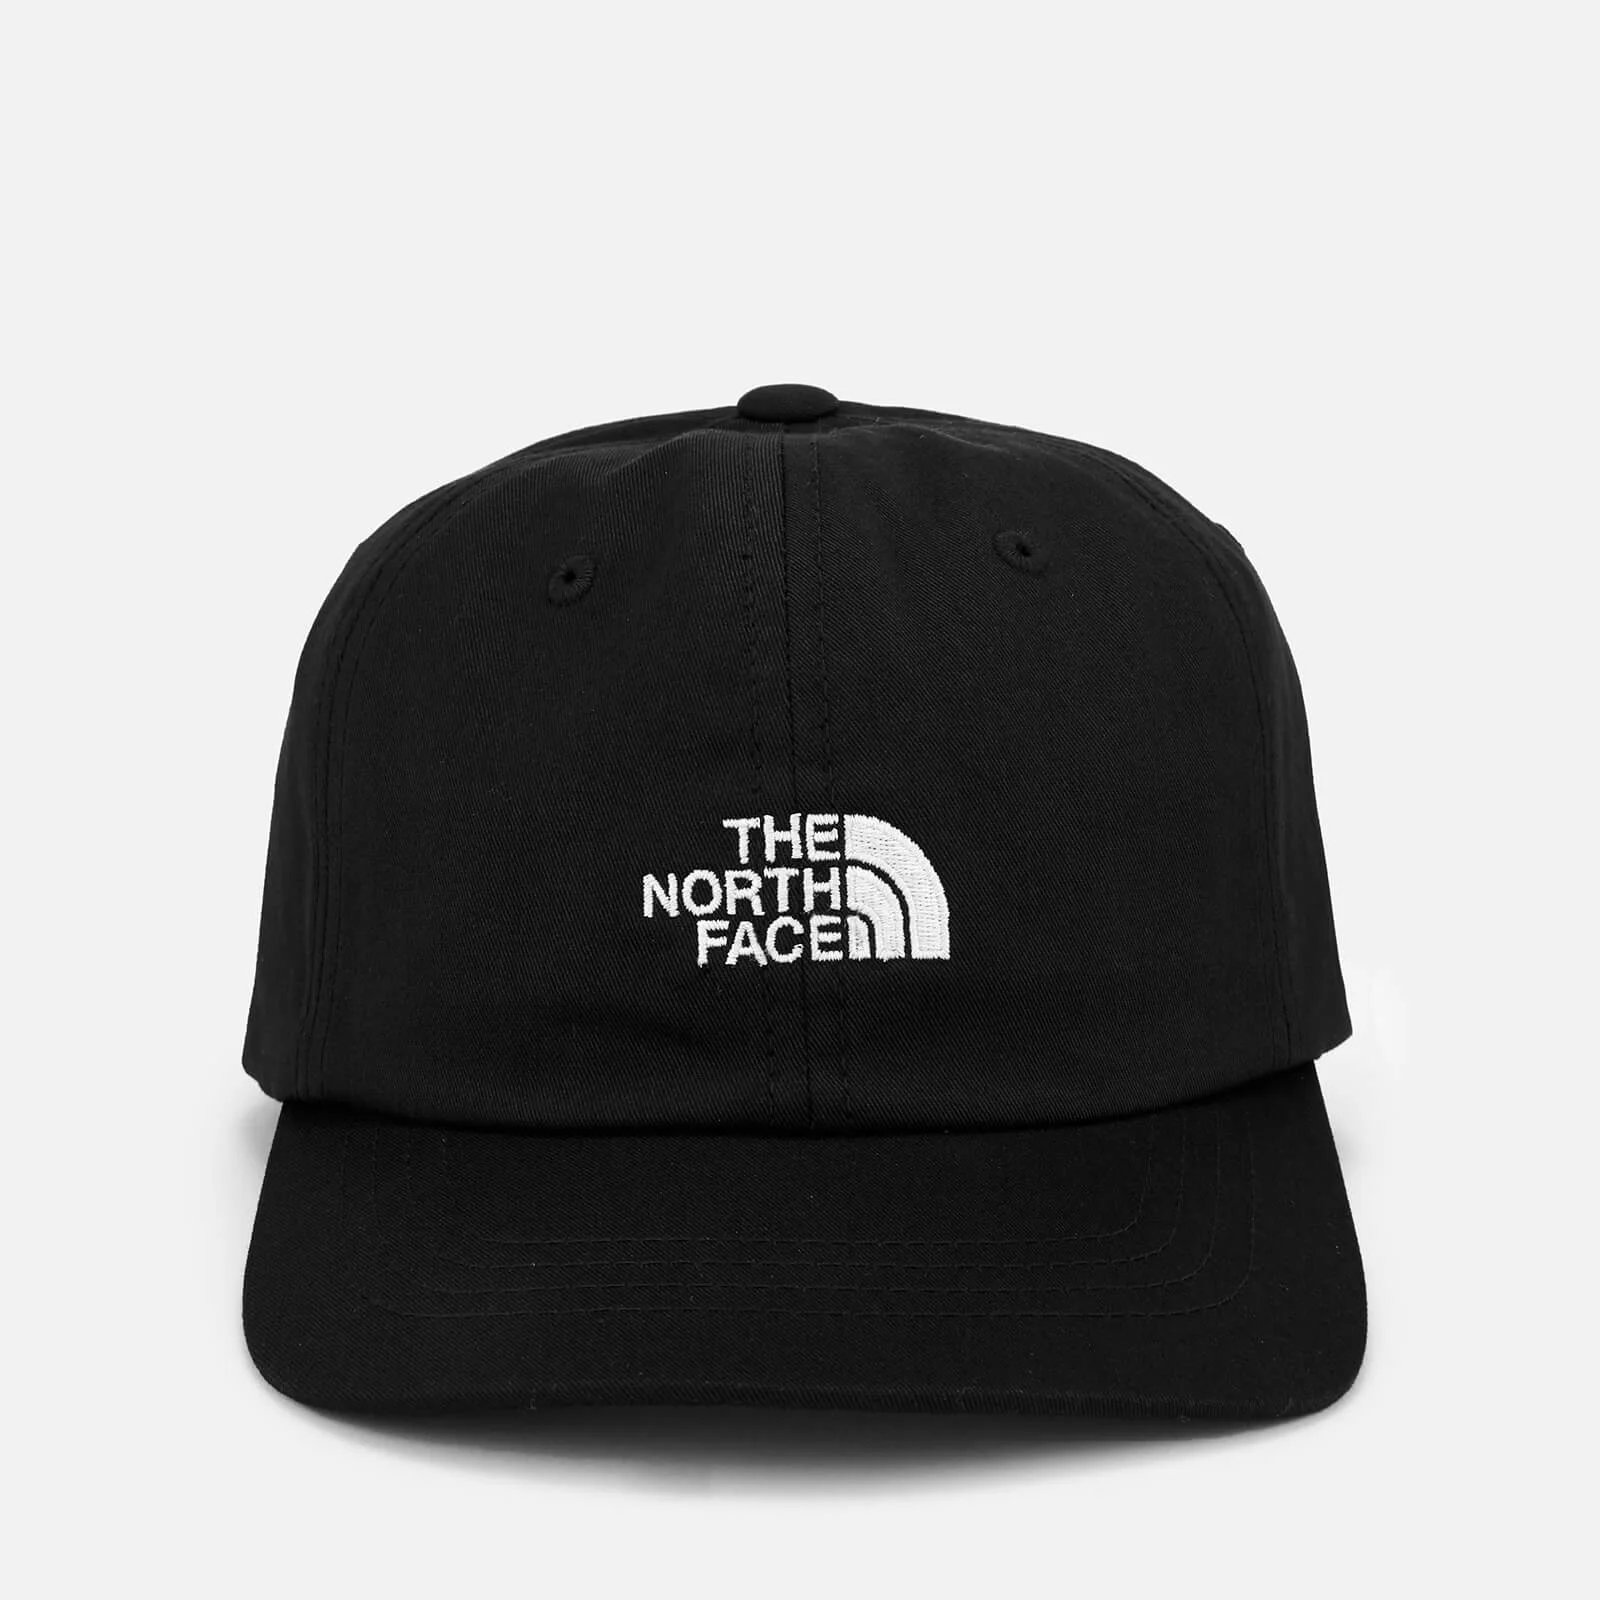 The North Face Men's The Norm Hat - TNF Black/TNF Black Image 1